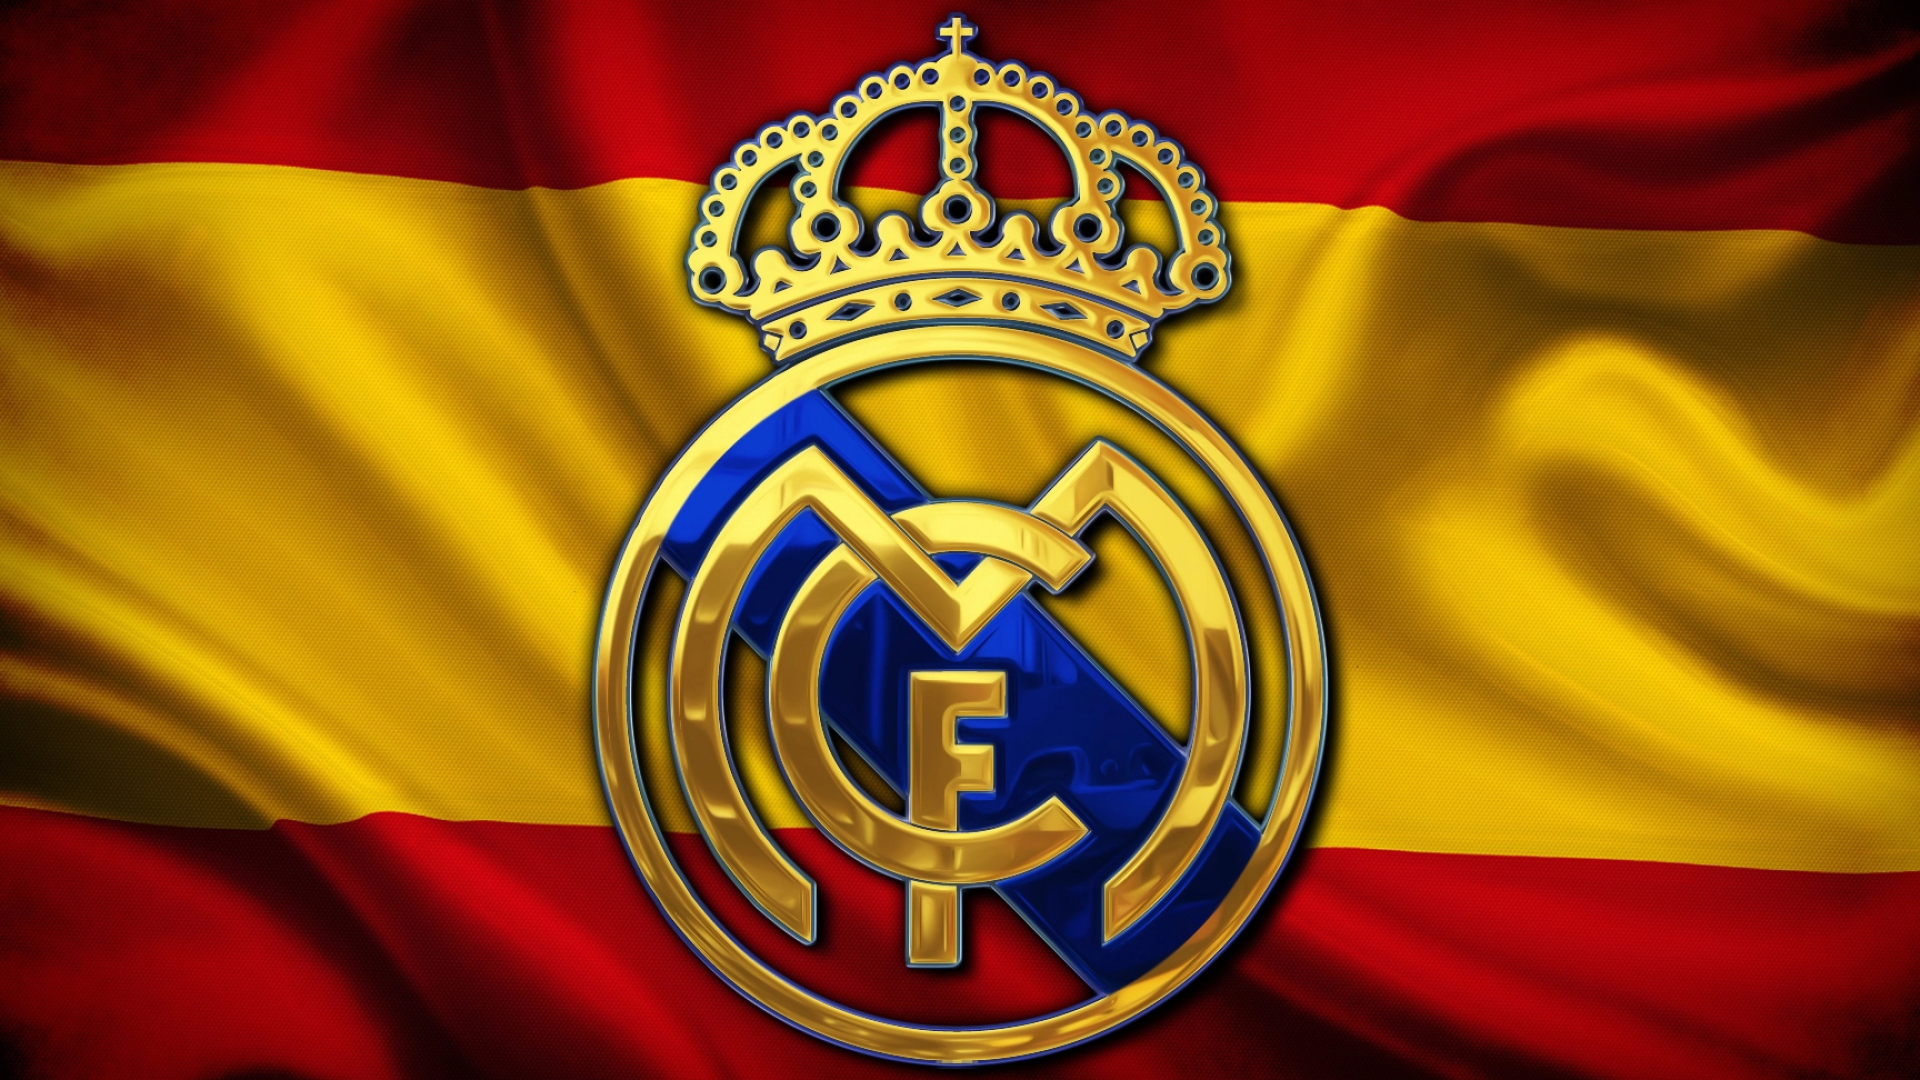 1920x1080 Real Madrid logo in Spain flag Wallpaper Full HD ID:3940